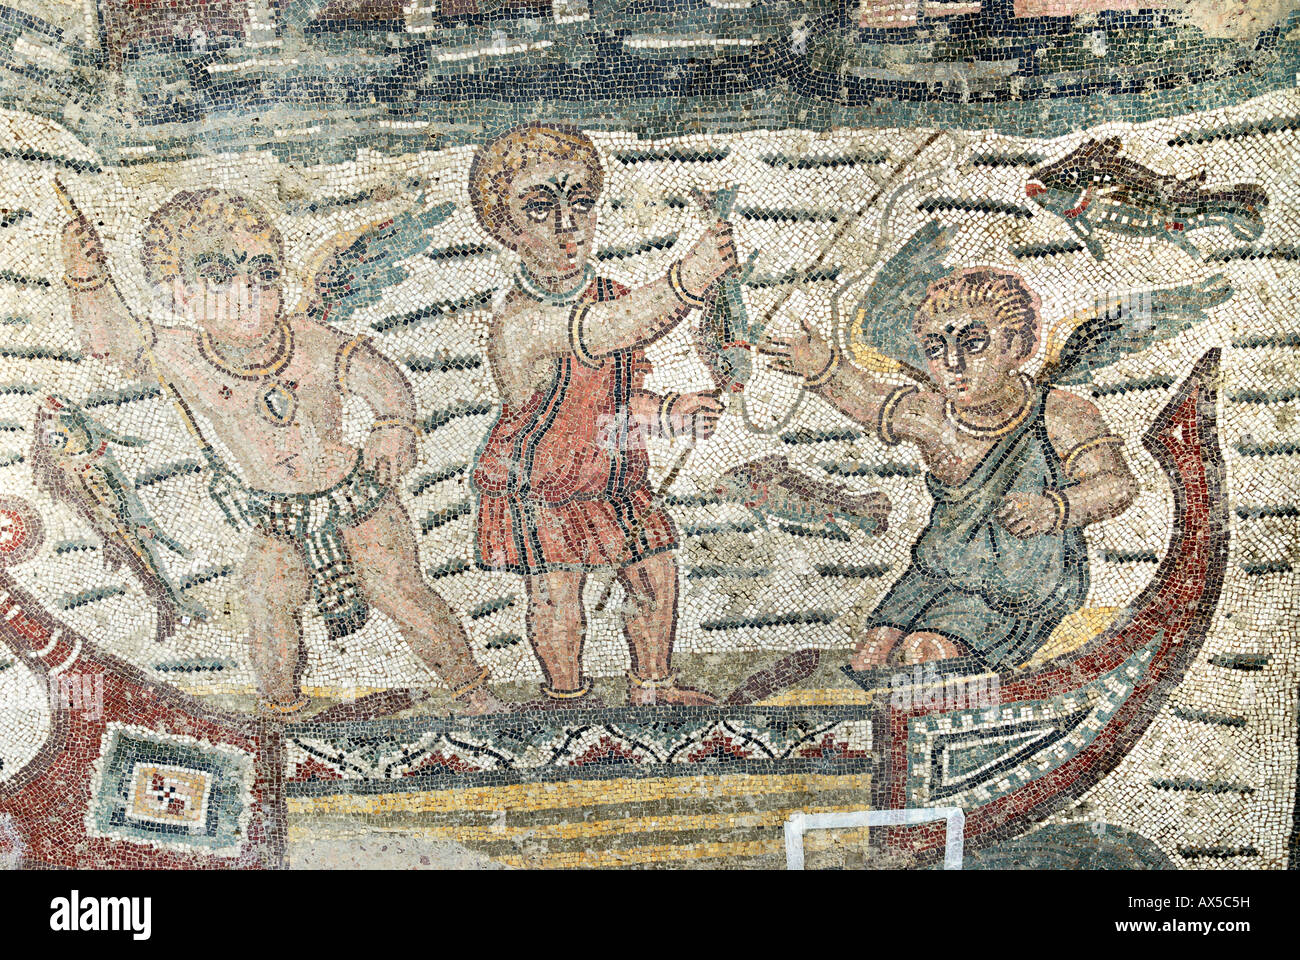 Puttos as fishermen in a boat mosaic floor Villa Casale Piazza Armerina Sicily Italy Stock Photo